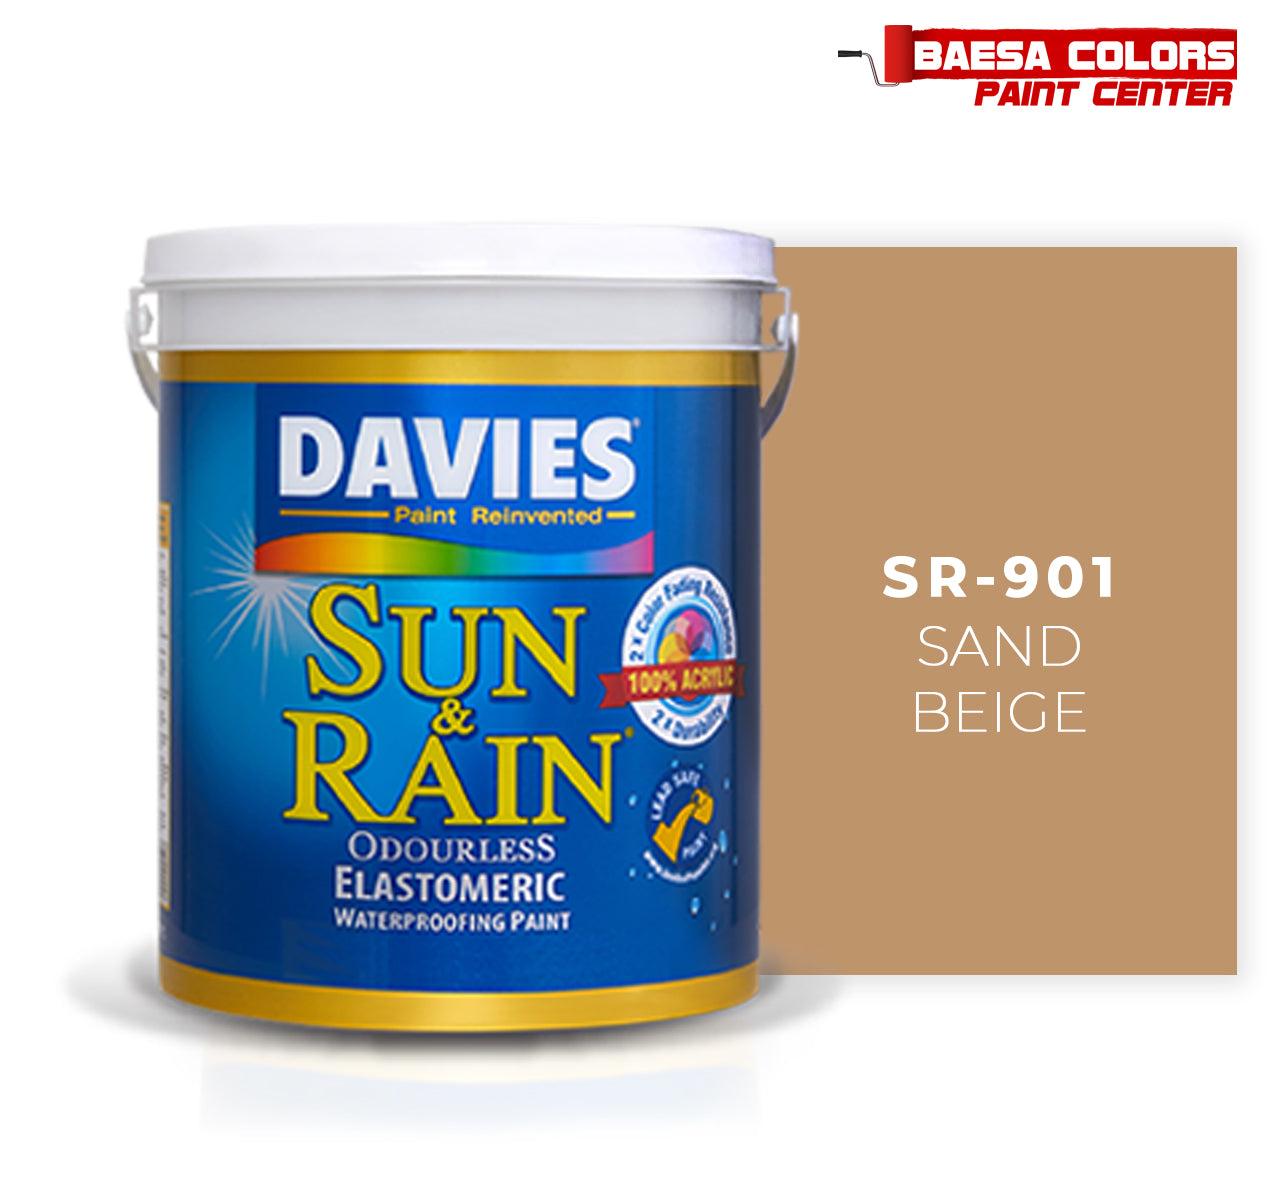 DAVIES® SUN & RAIN® 901 Sand Beige Elastomeric Paint